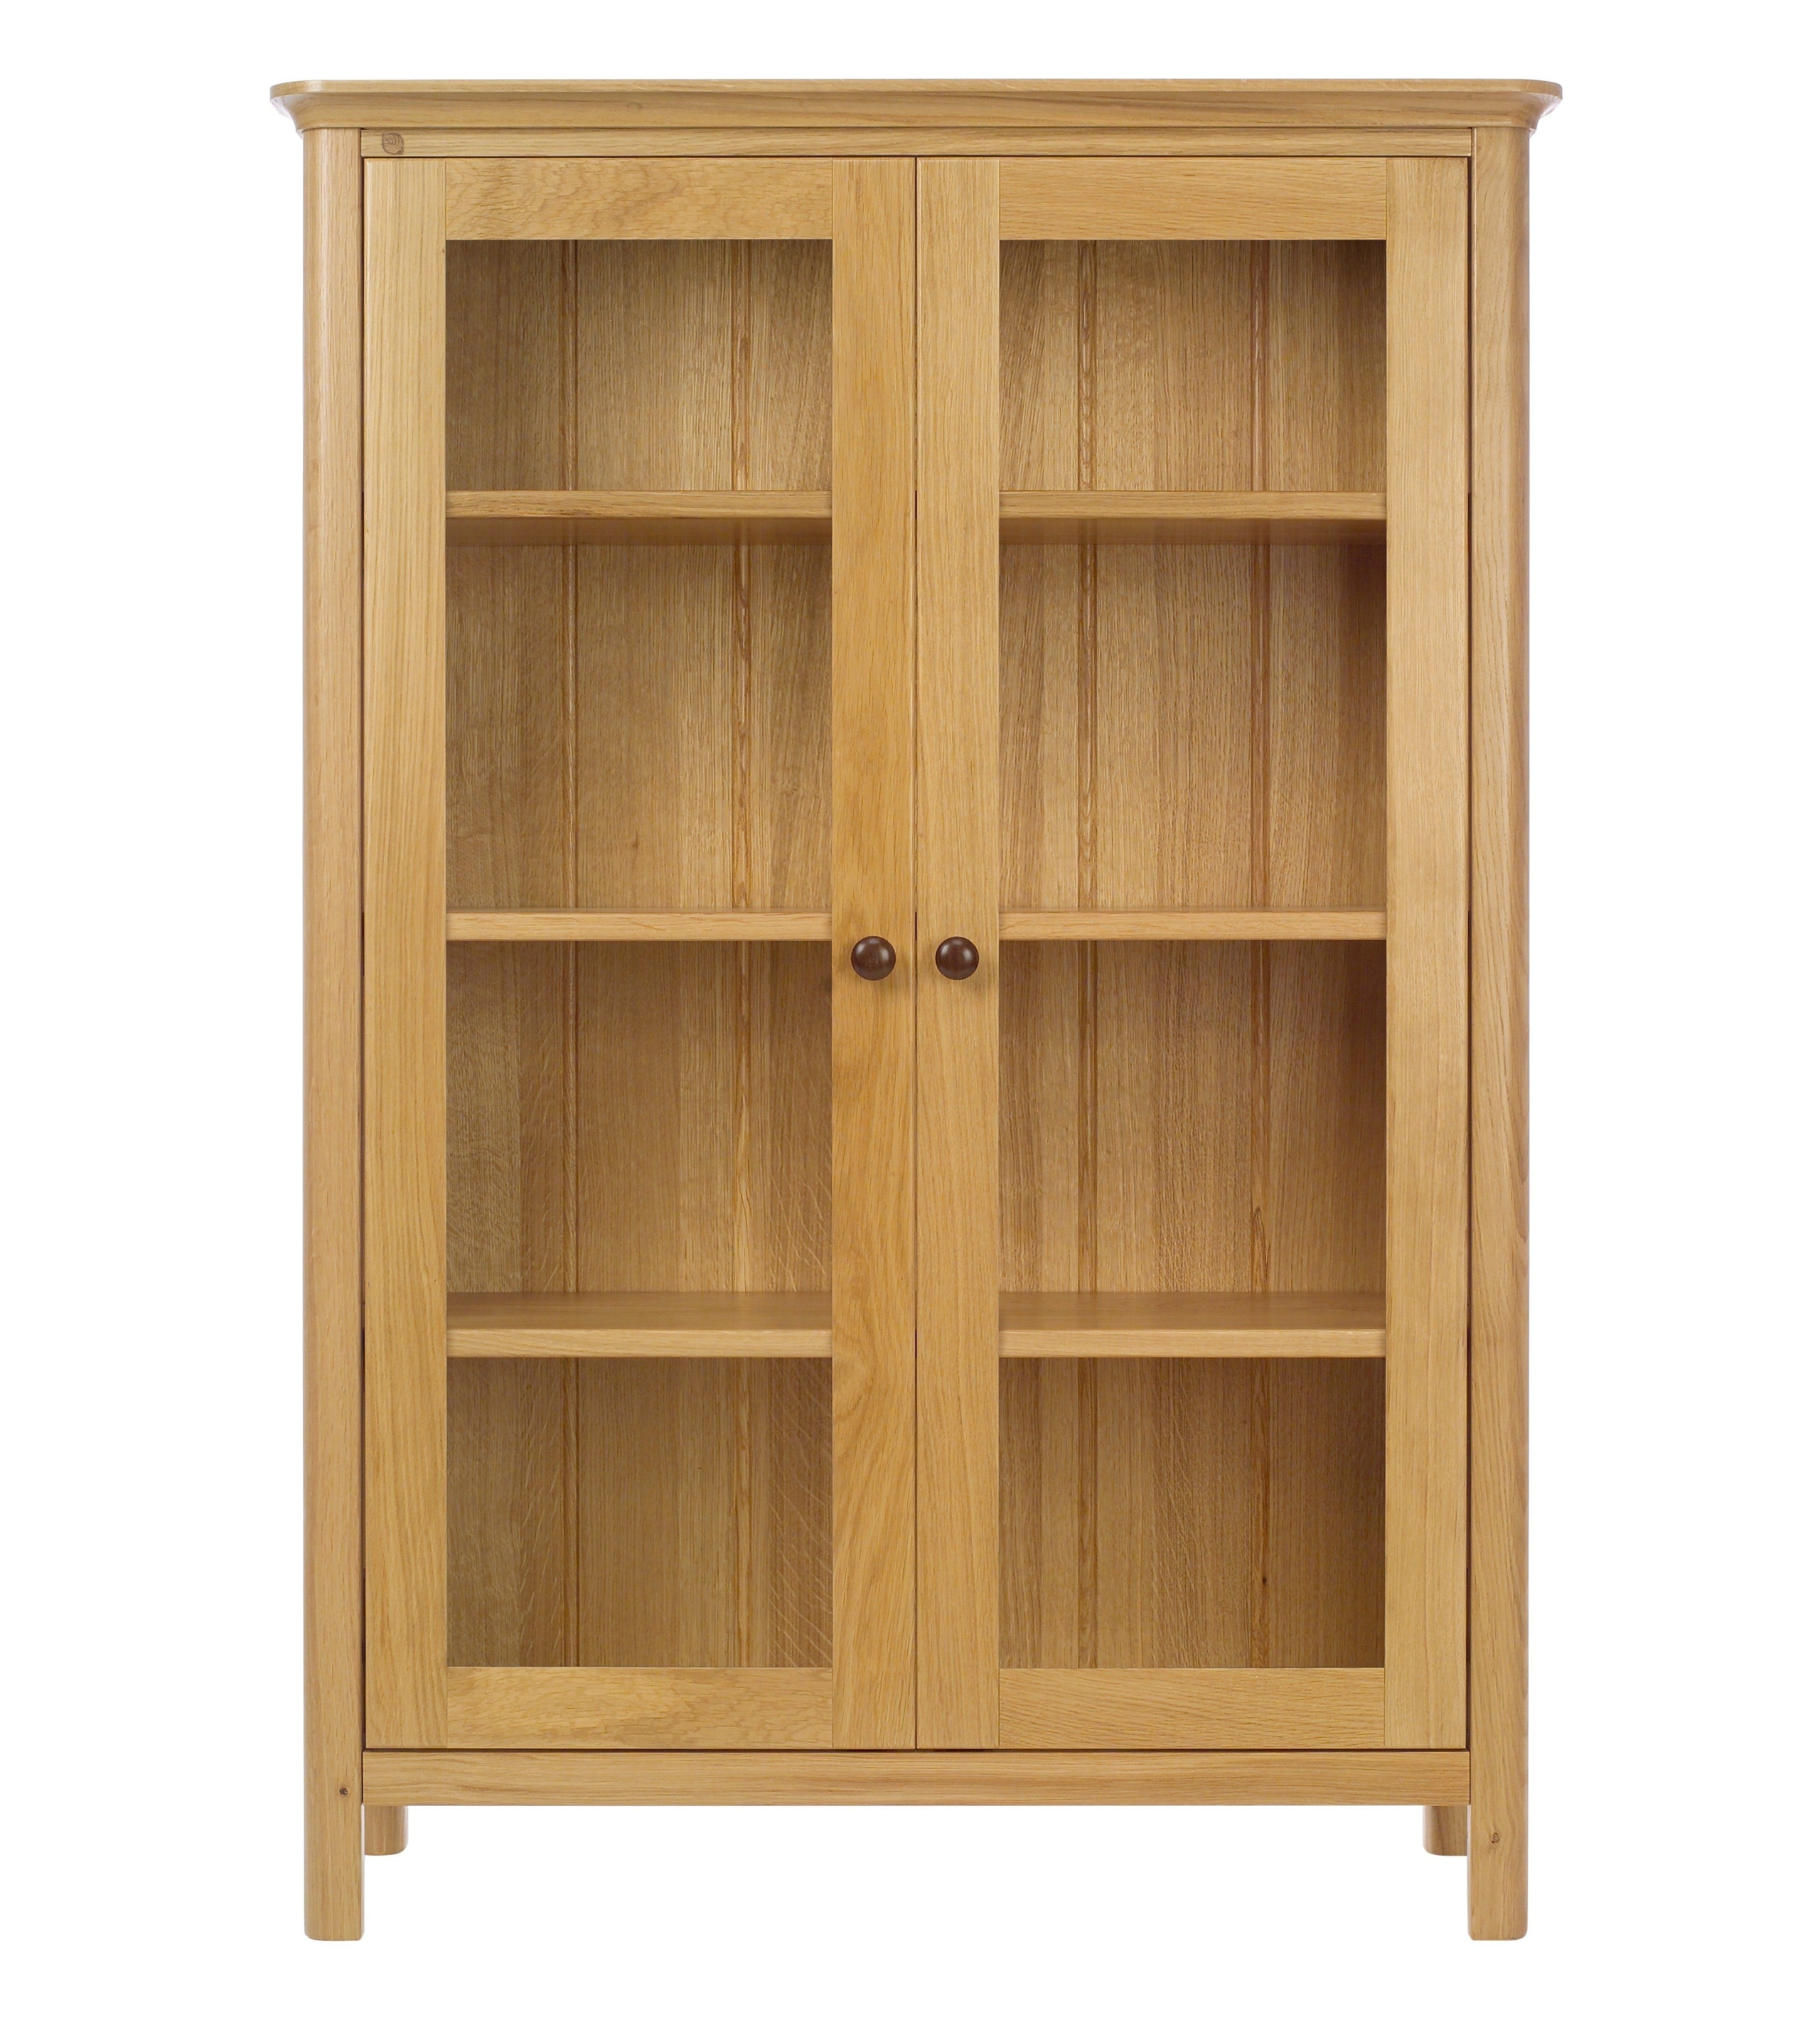 Oak bookcase midi wide deep with glazed doors doors and